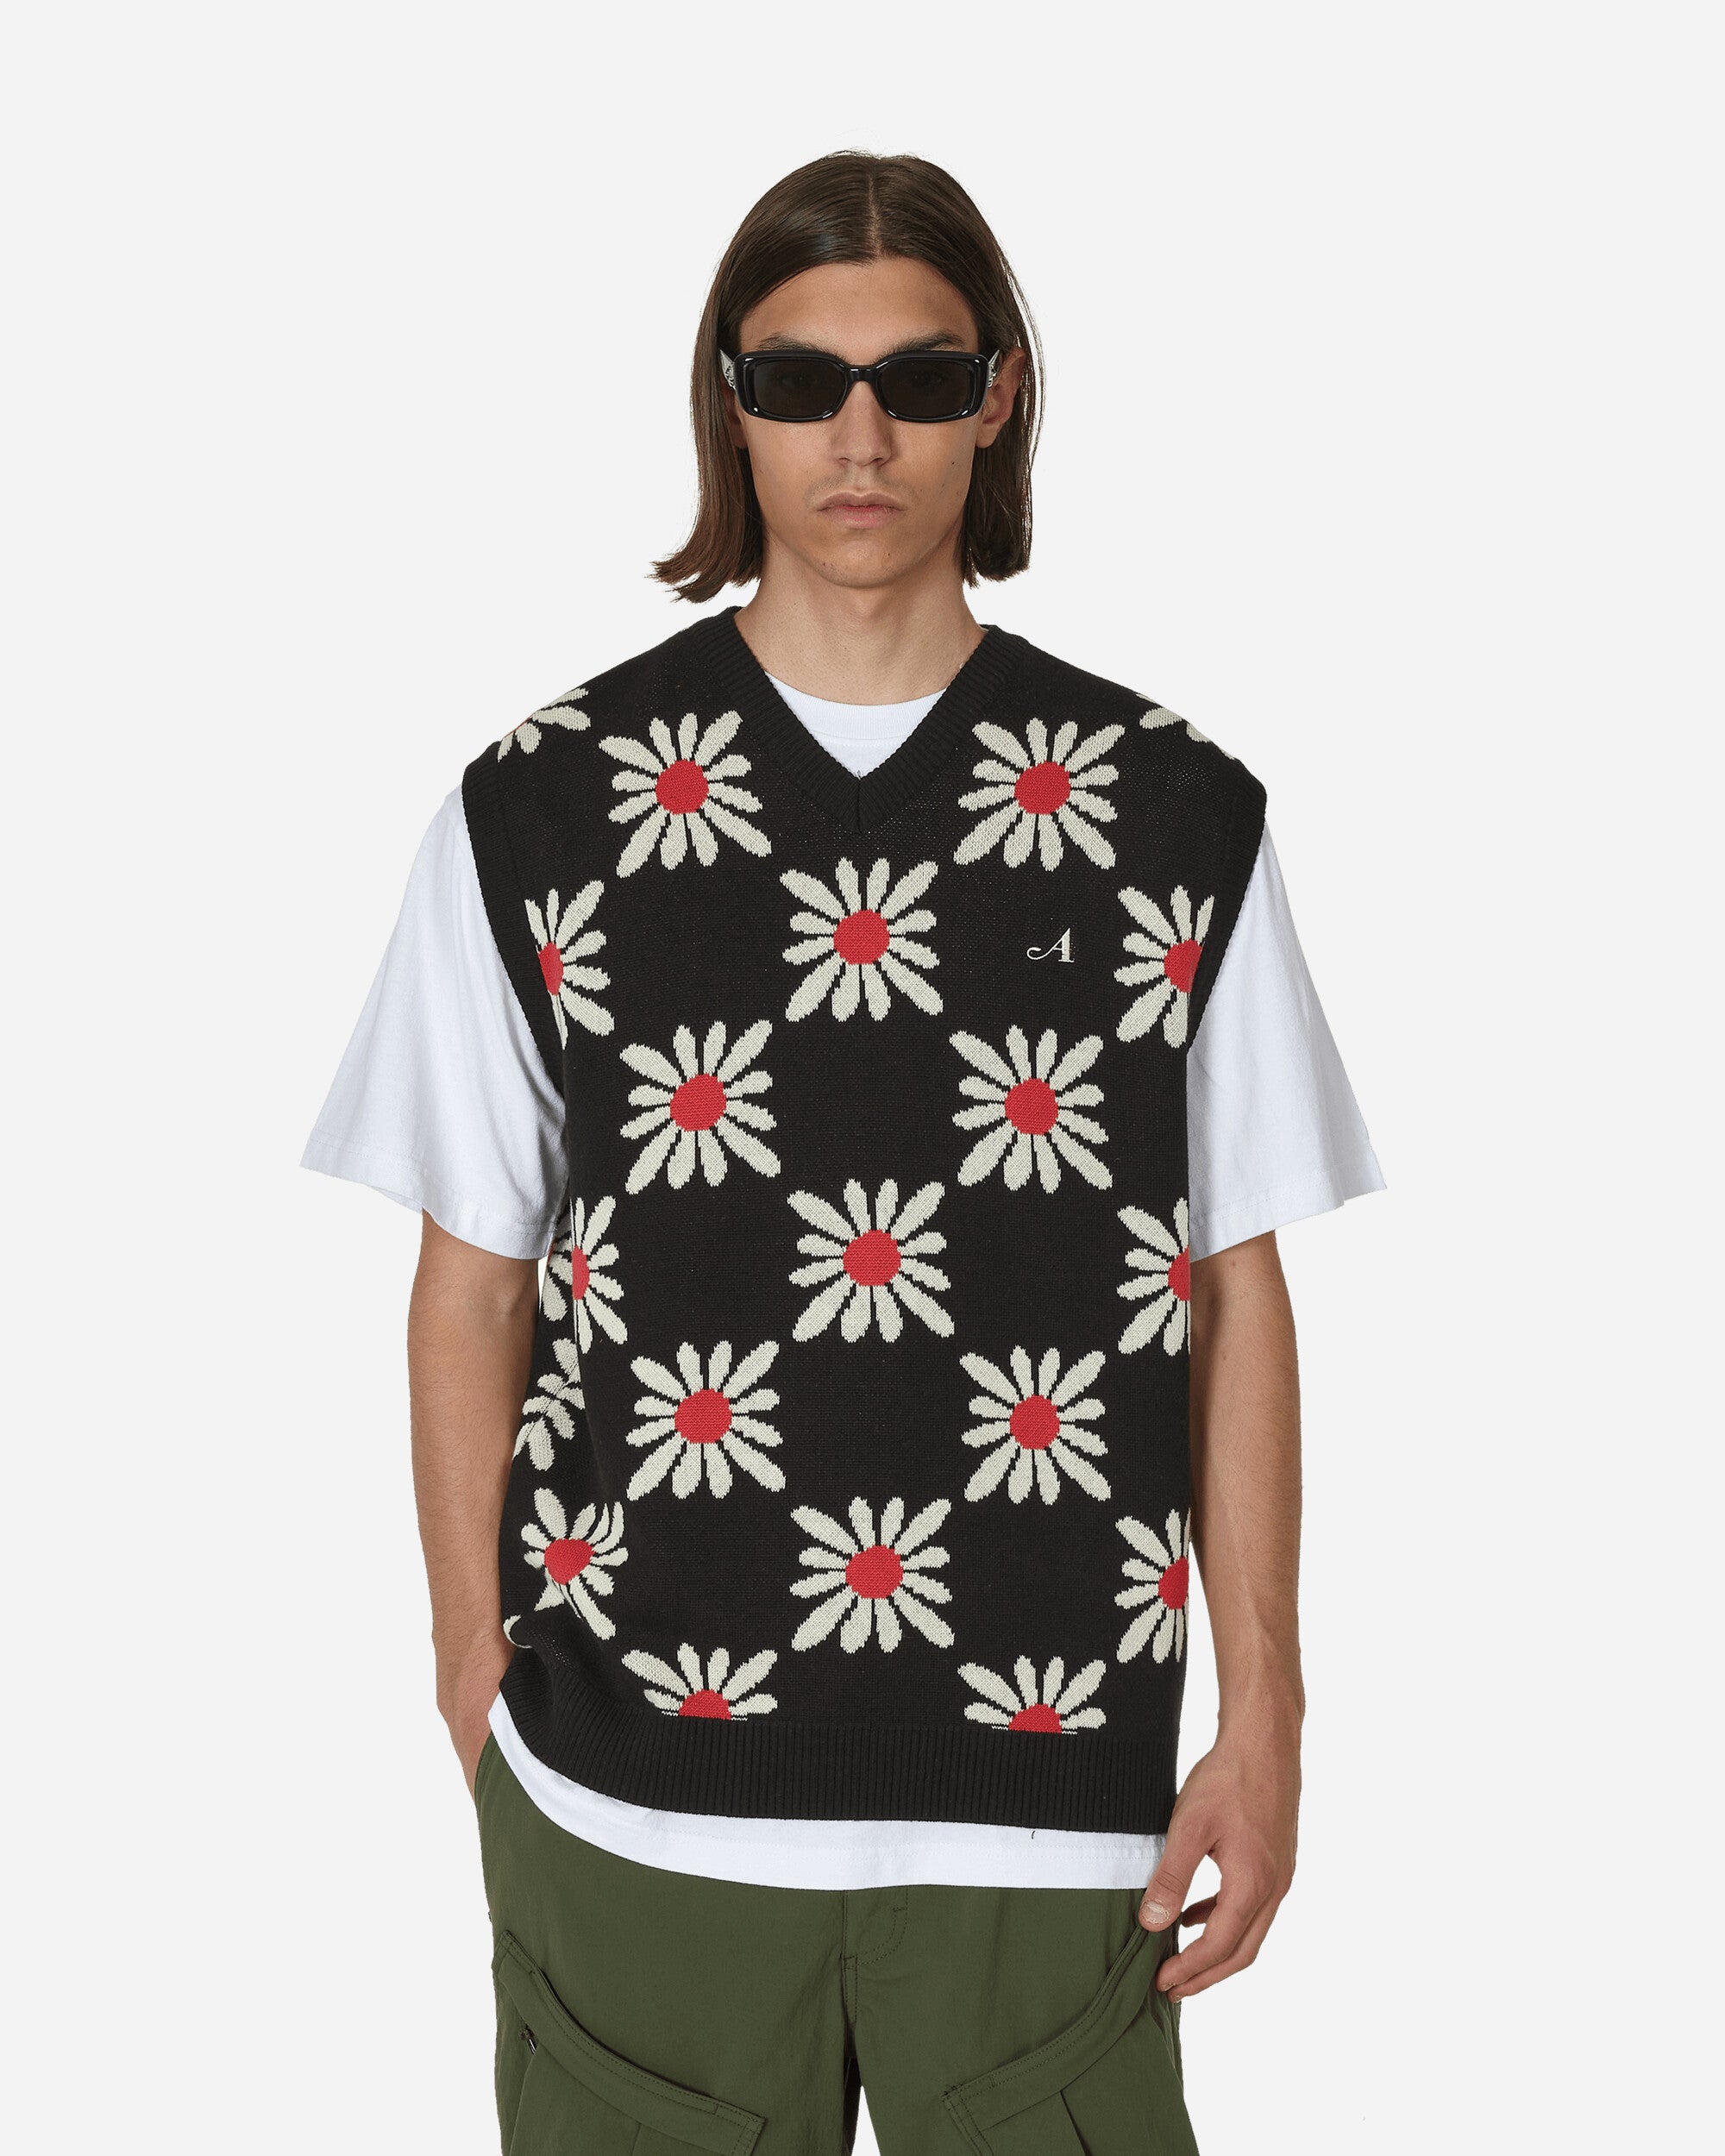 Checkered Floral Sweater Vest Black